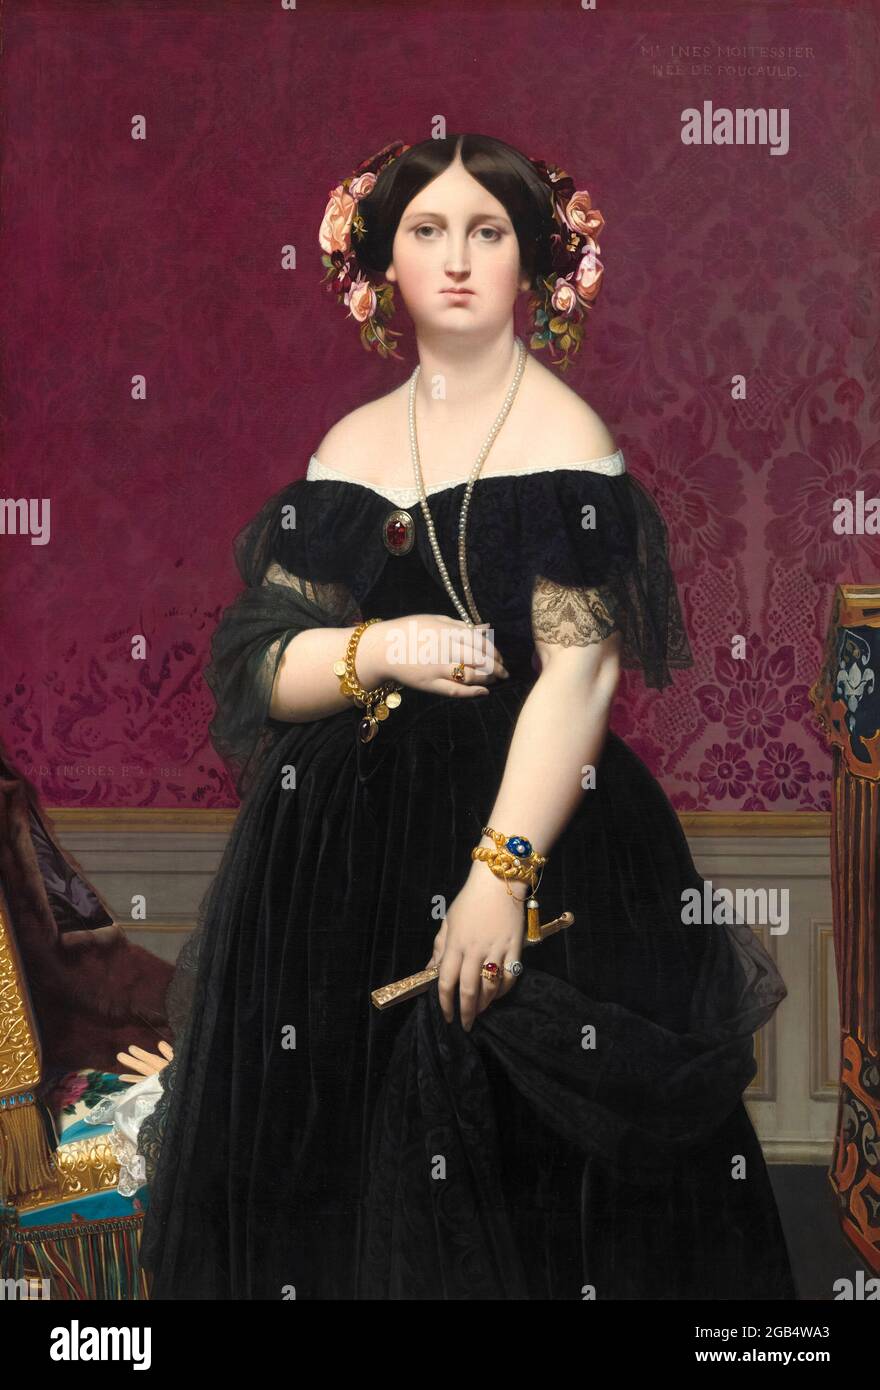 Madame Moitessier, portrait painting by Jean Auguste Dominique Ingres, 1851 Stock Photo